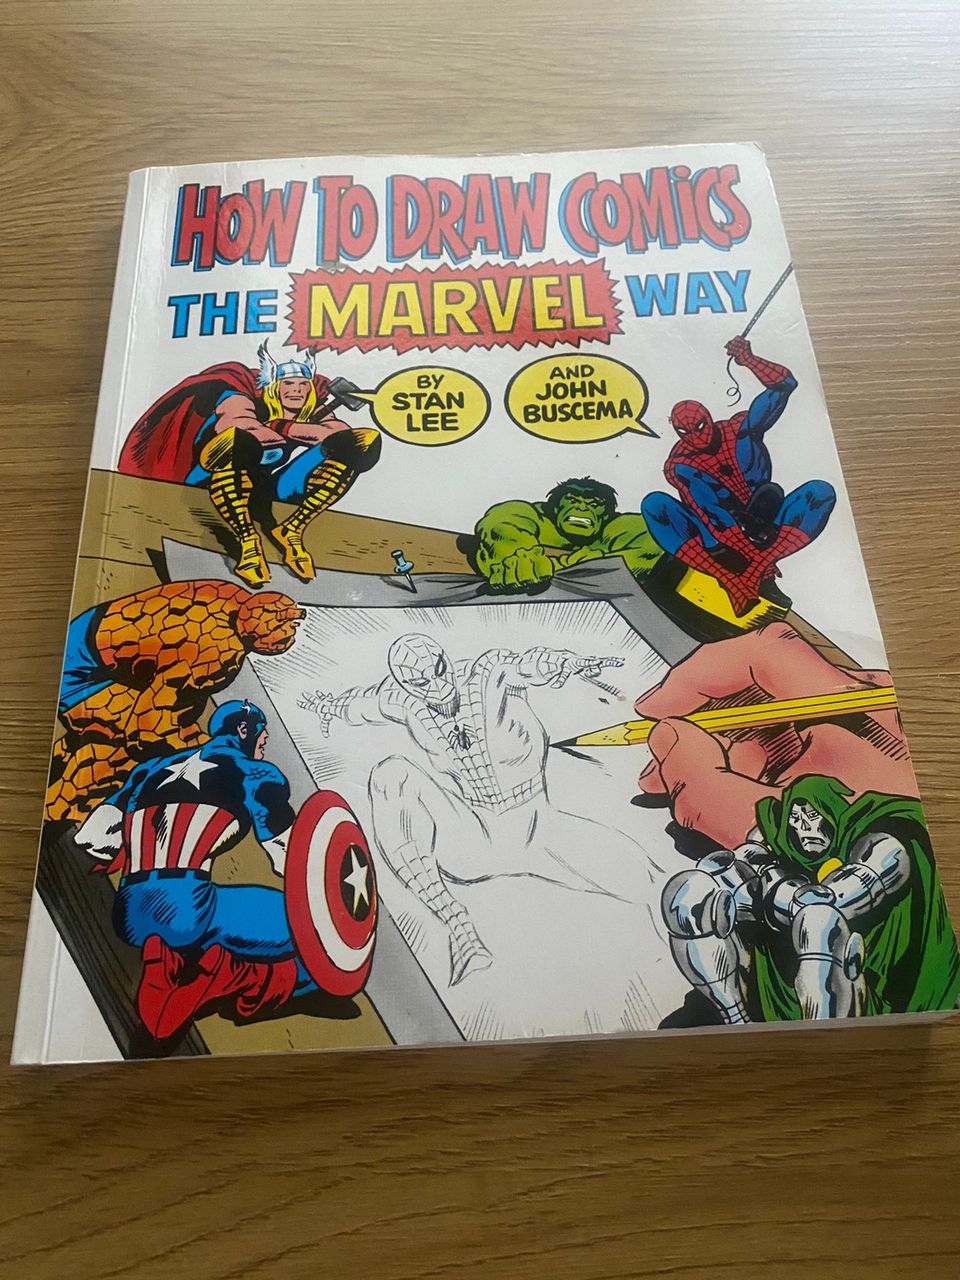 Marvel piirutus kirja how to draw comics the marvel way